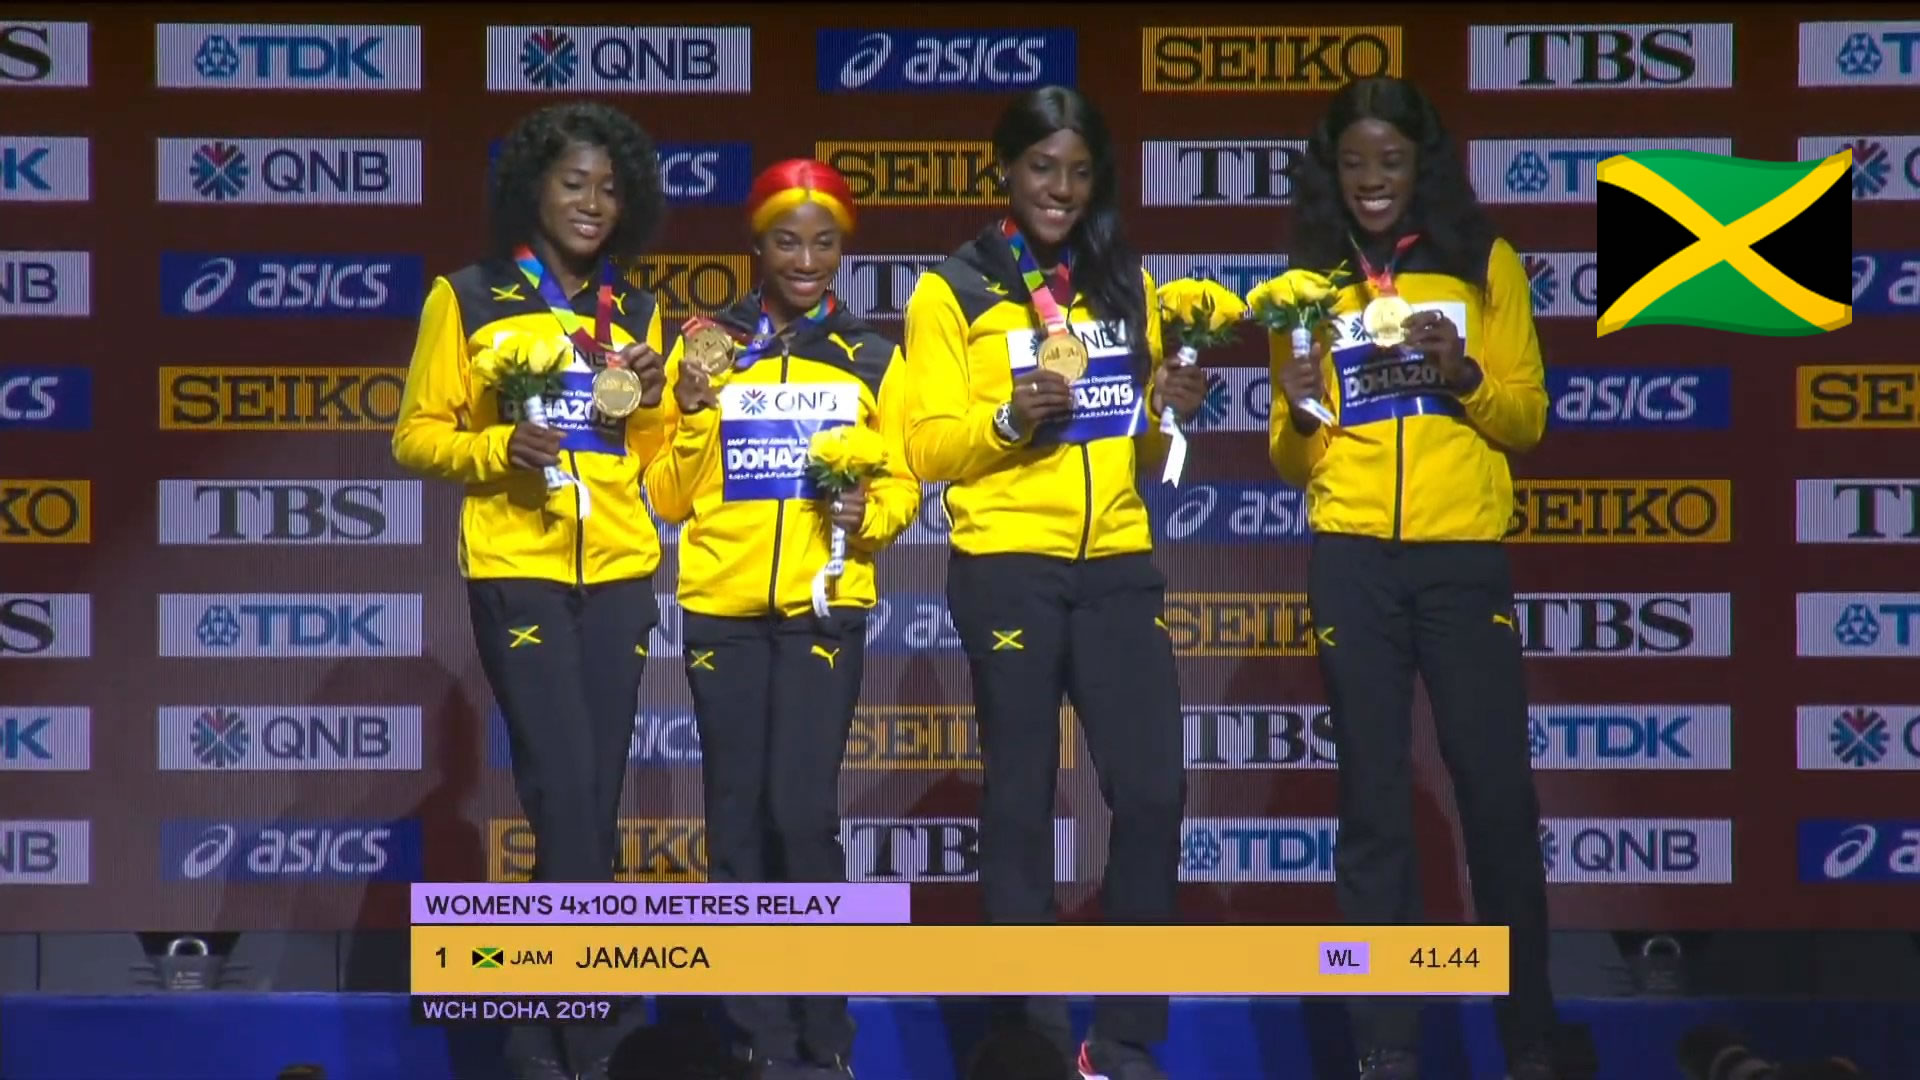 Watch: Team Jamaica's Women 4x100m Relay team crowned World Champions